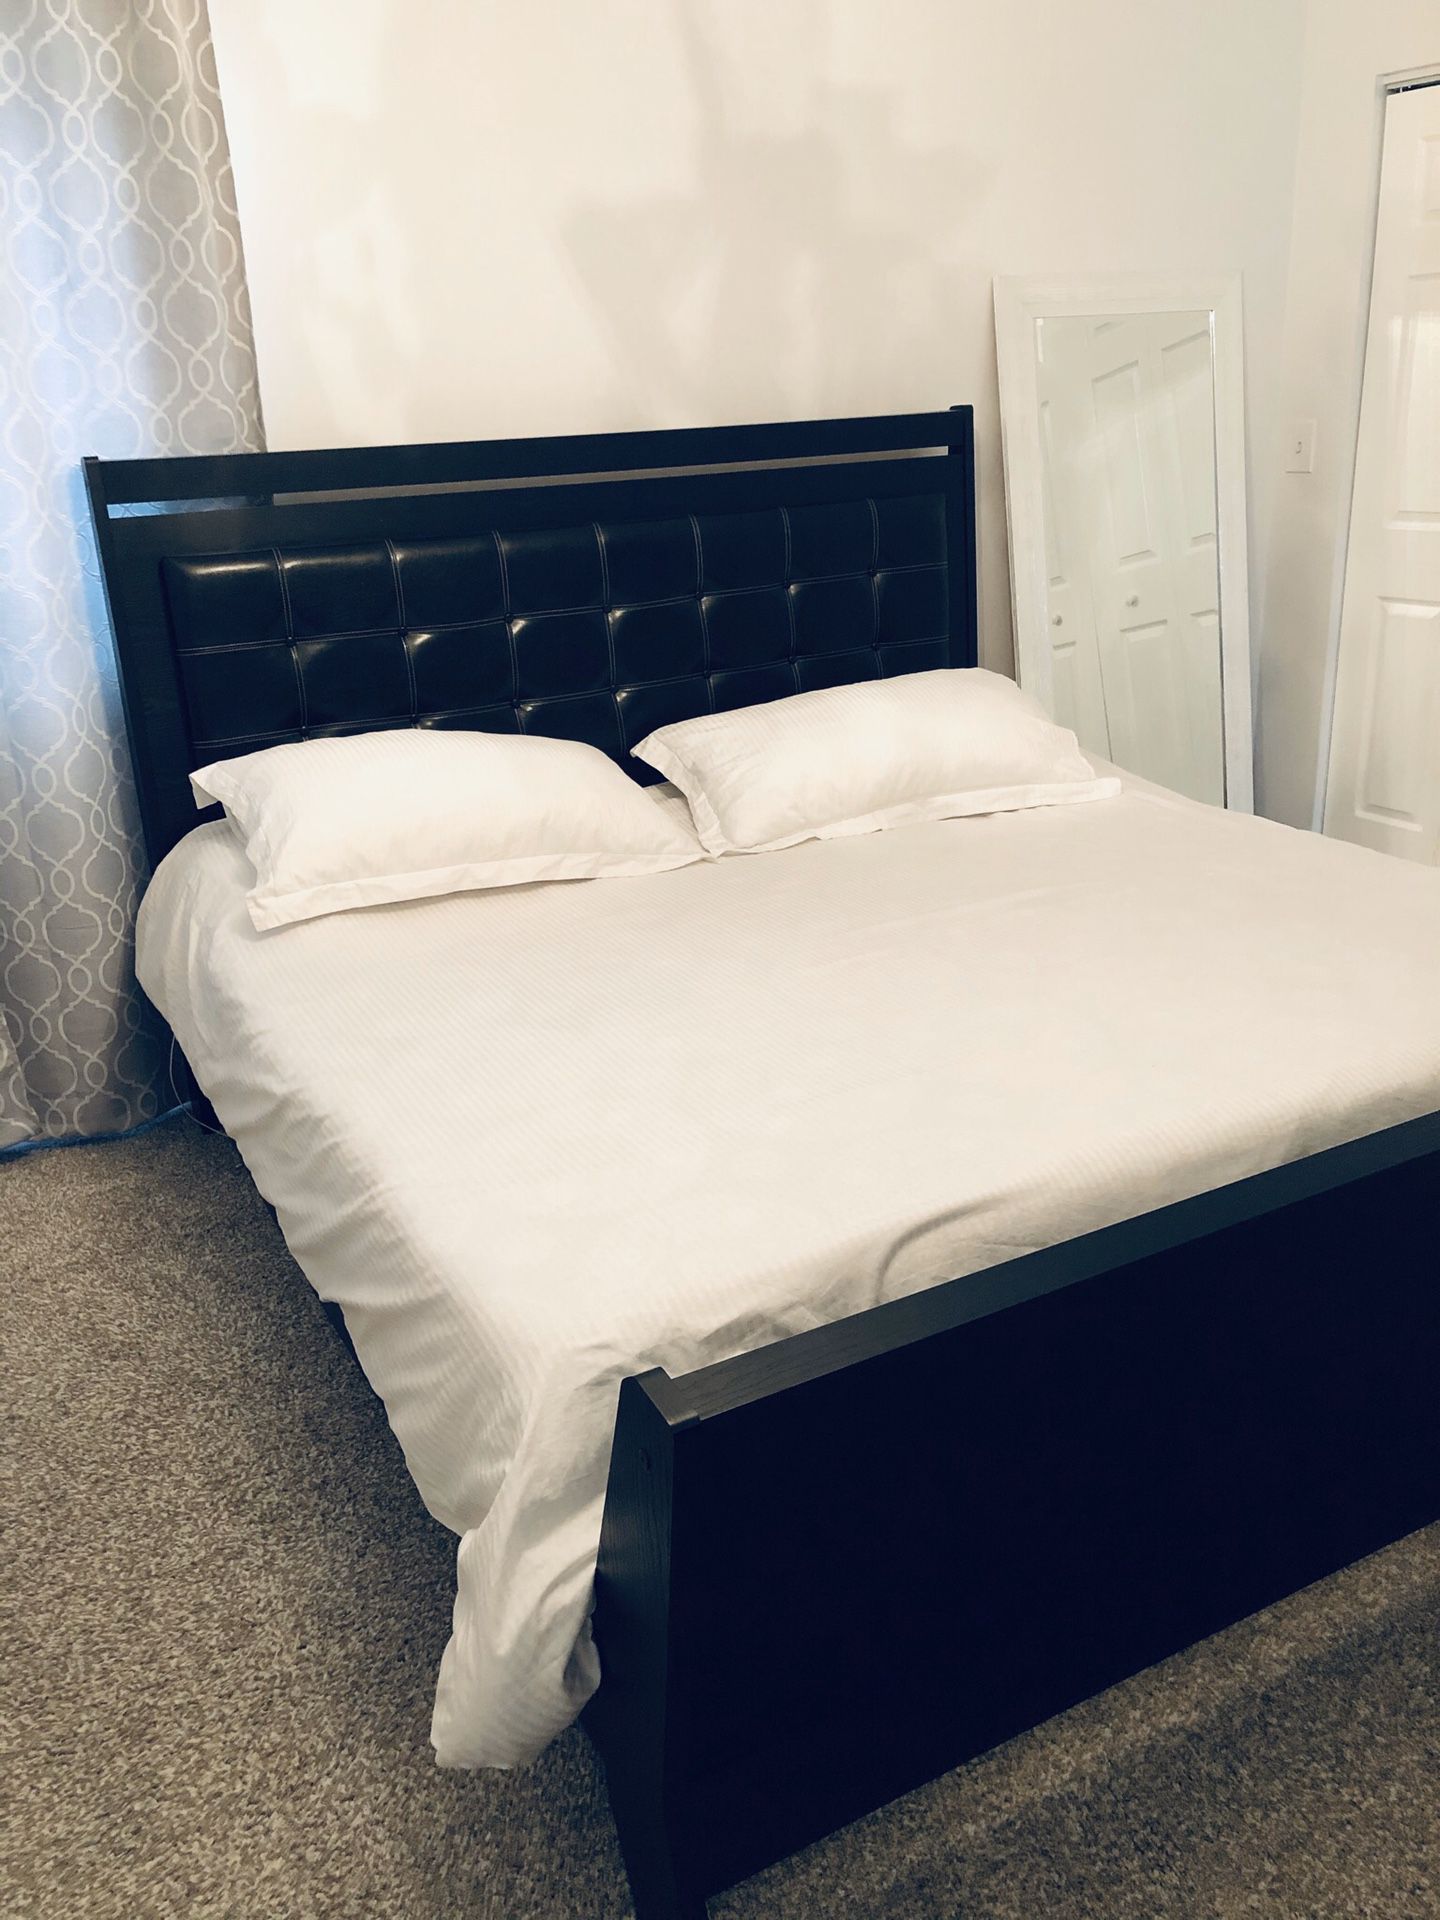 King size bed frame and dresser